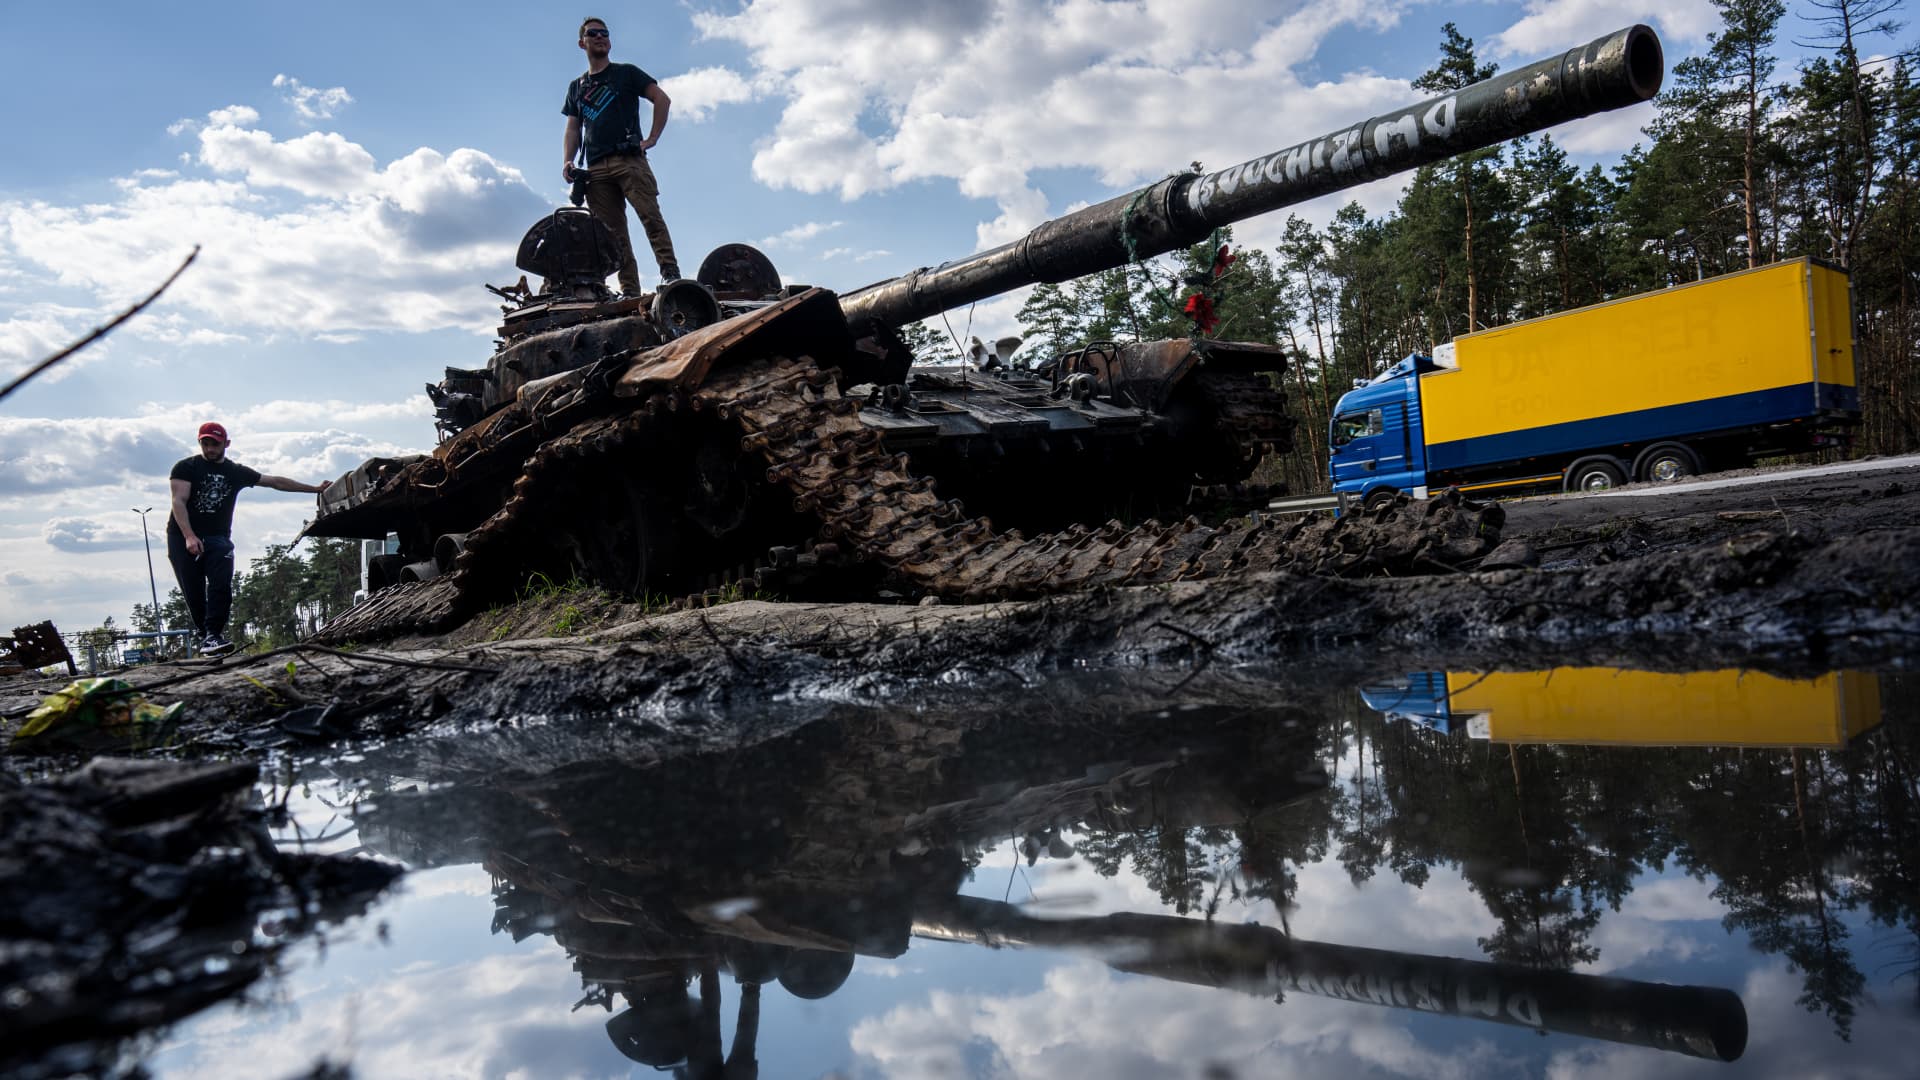 MAKARIV, UKRAINE - MAY 2: Ukrainians gather around a destroyed Russian tank near Makariv, Kyiv Oblast, Ukraine on May 2, 2022. (Photo by Wolfgang Schwan/Anadolu Agency via Getty Images)